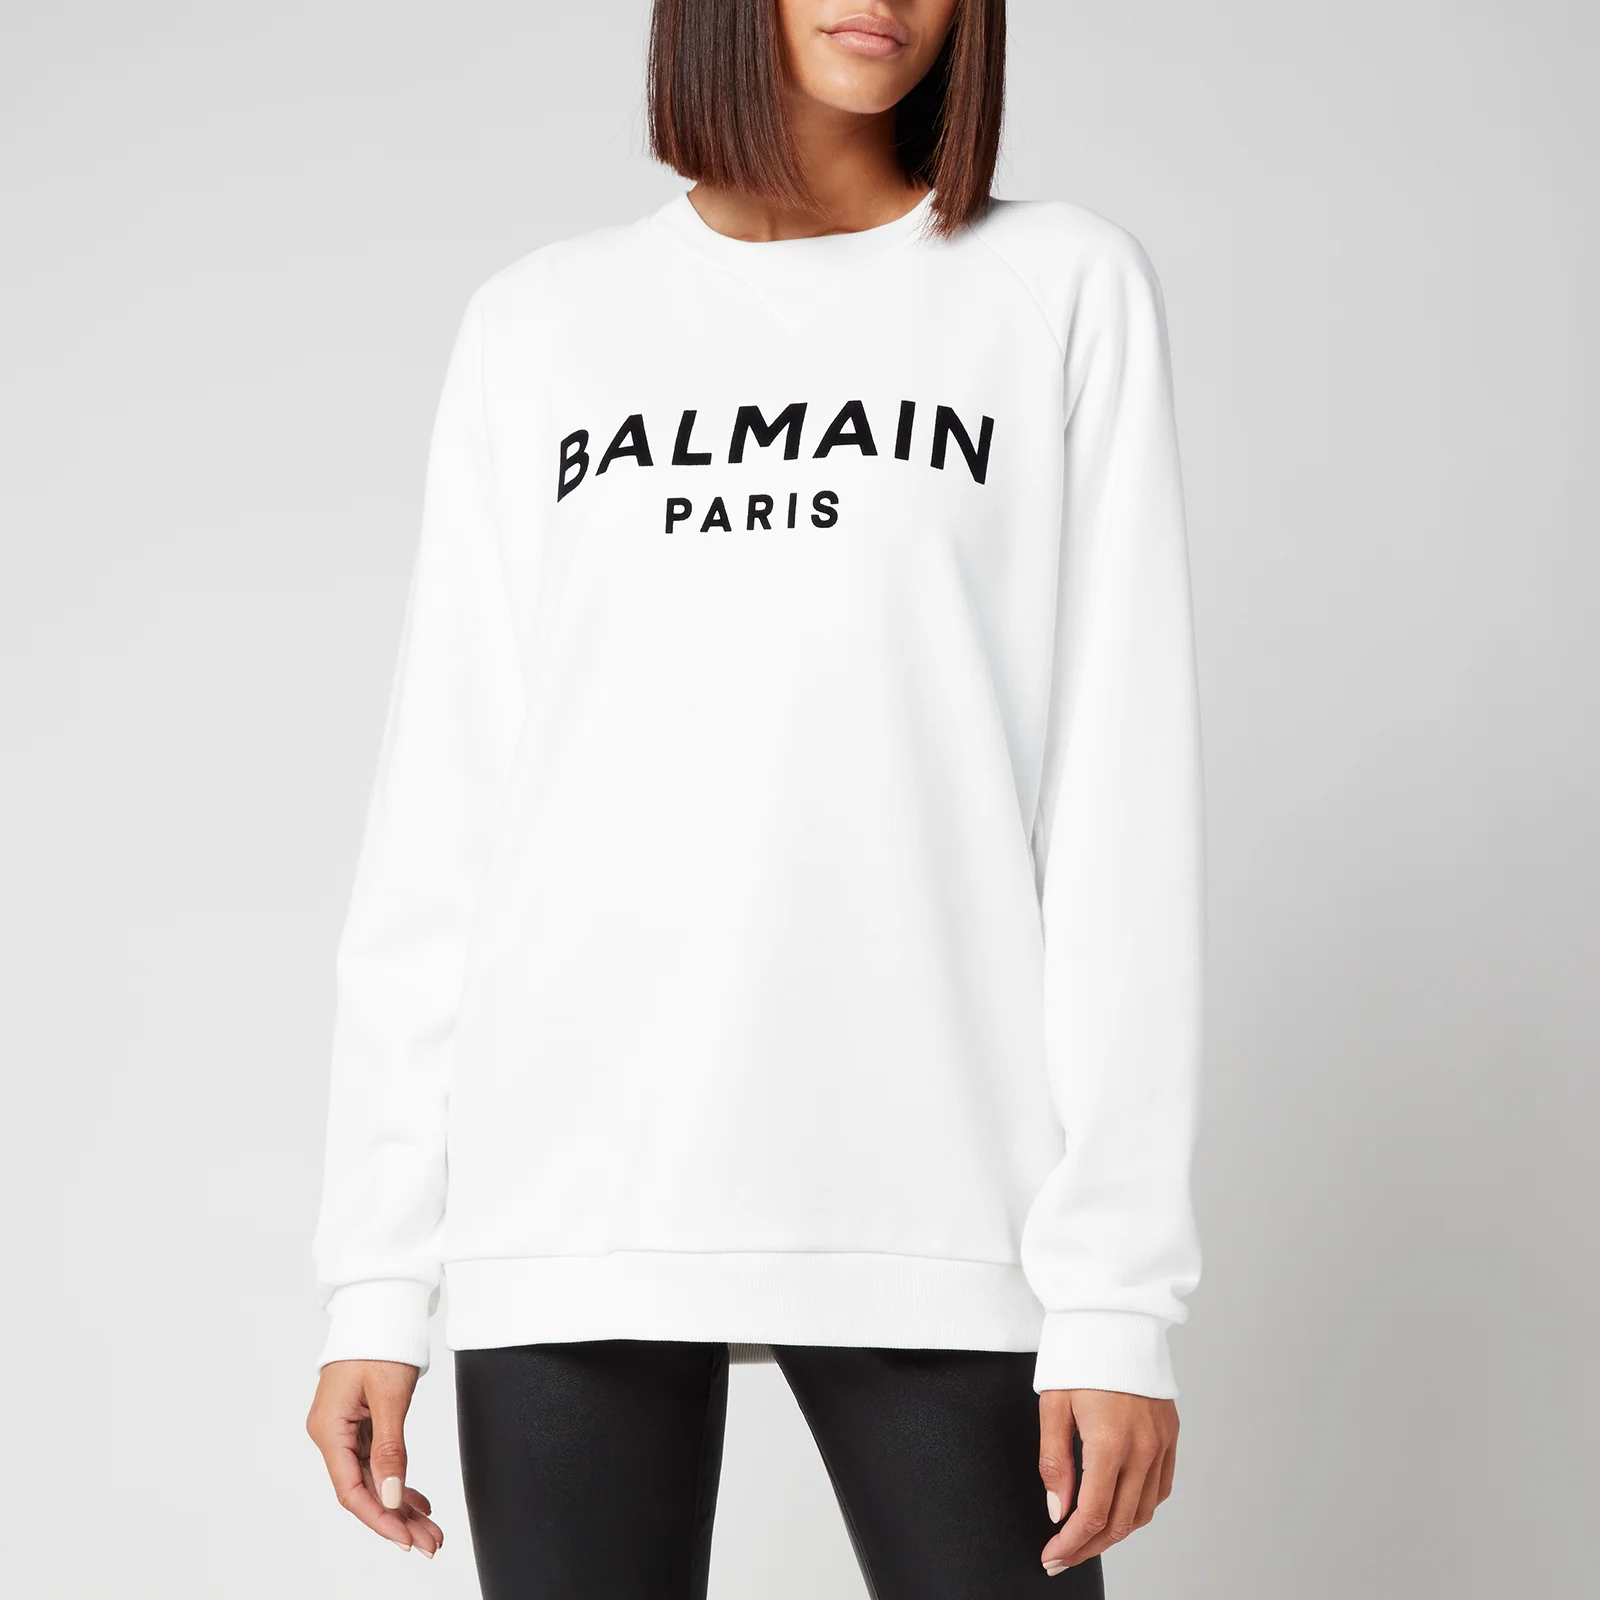 Balmain Women's Flocked Logo Sweatshirt - Blanc/Noir Image 1